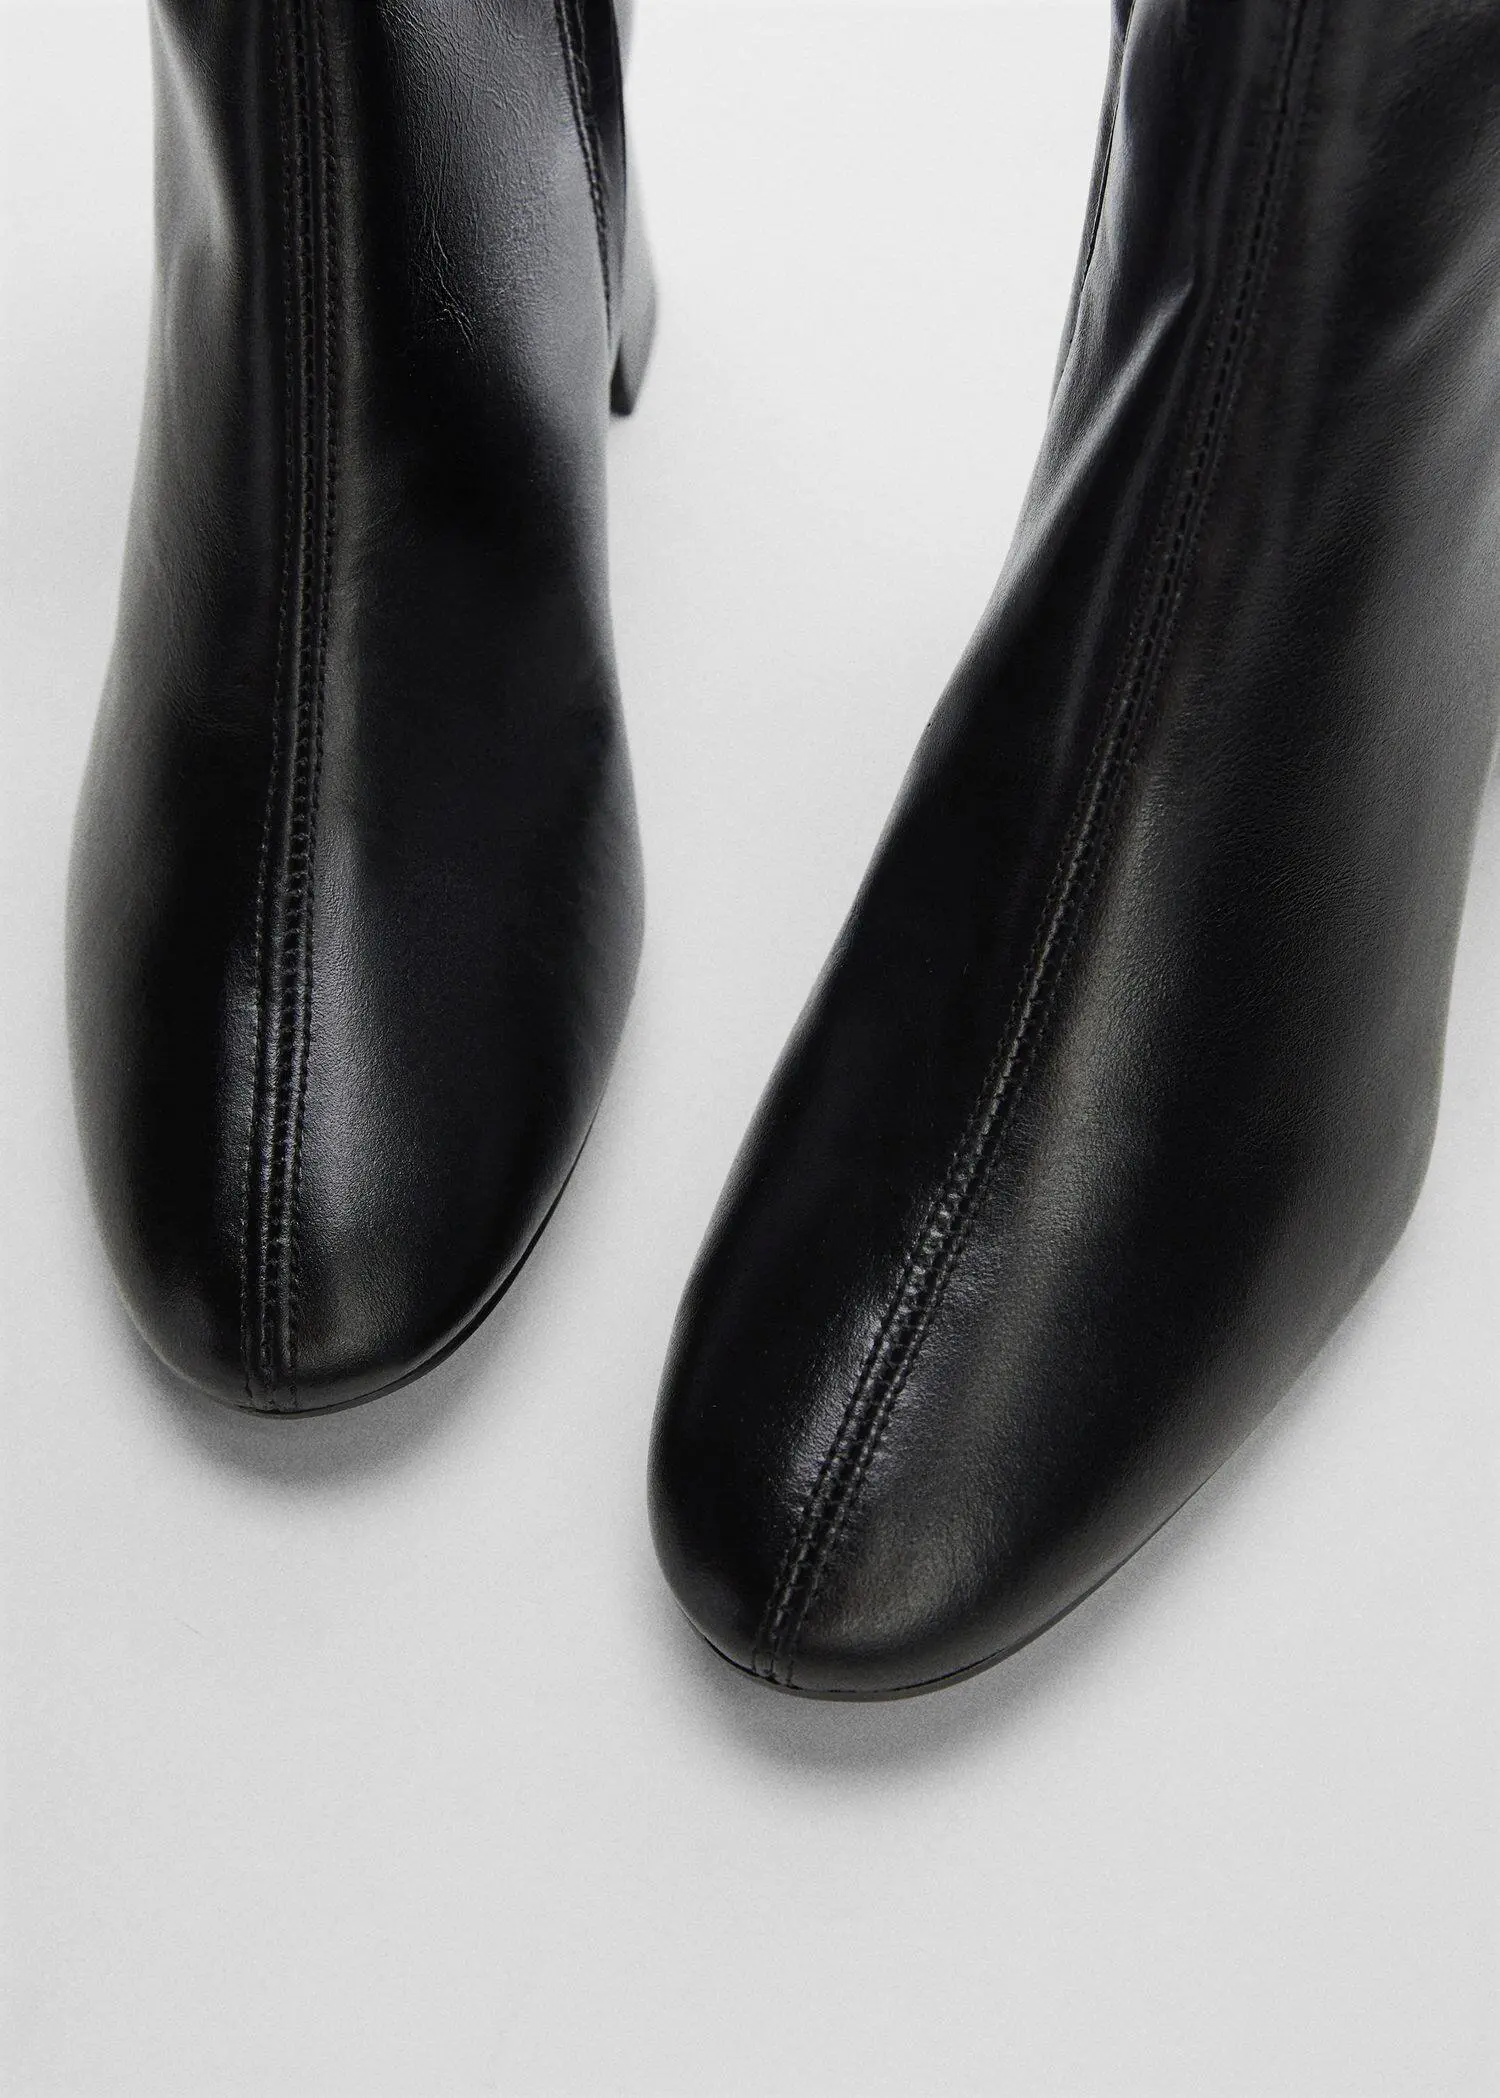 Mango Heel leather ankle boot. 2